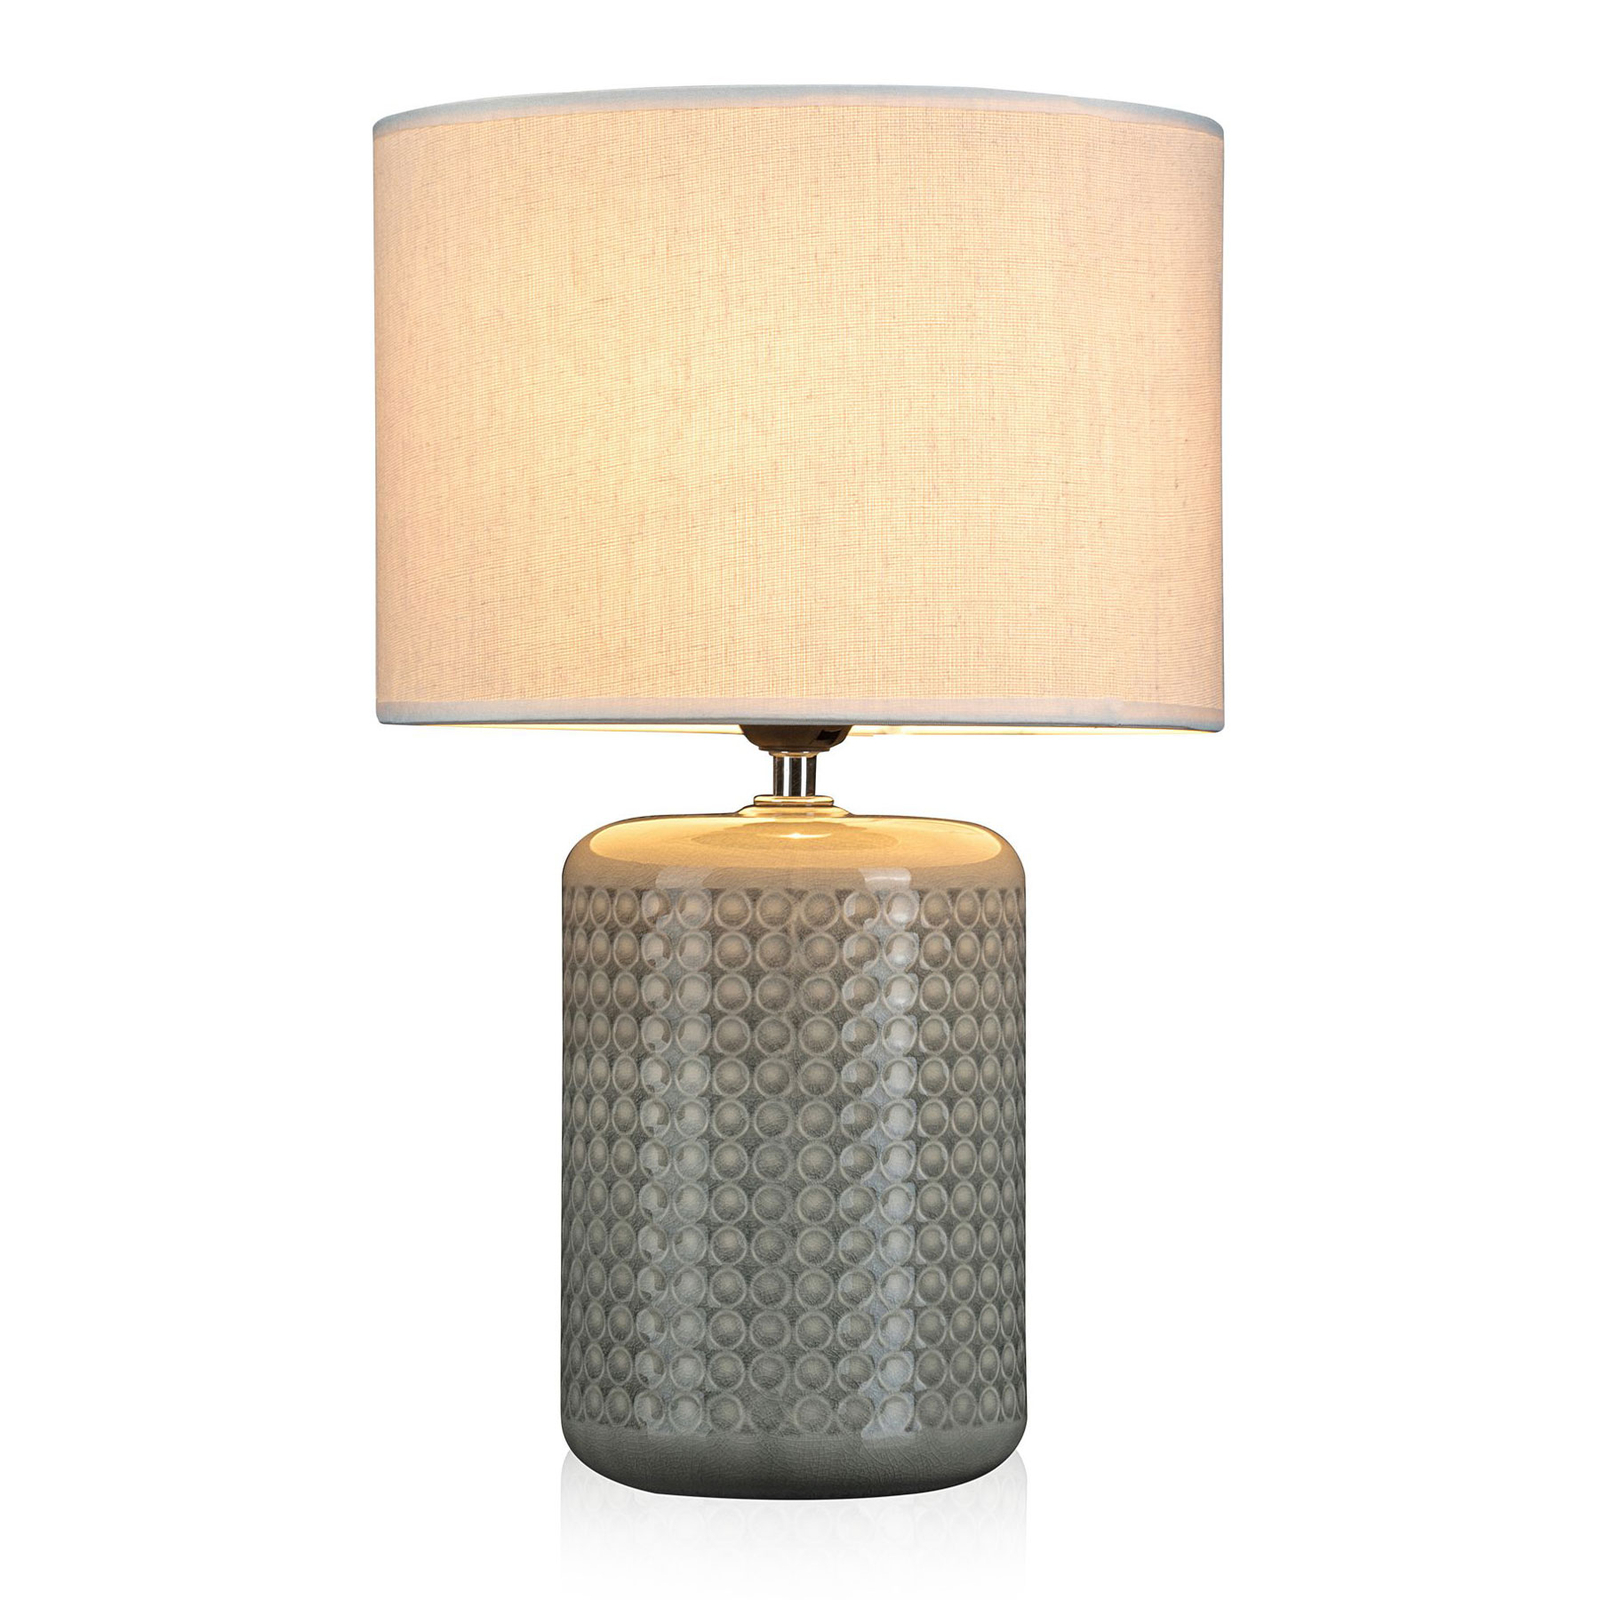 Pauleen Go for Glow table lamp, ceramic base